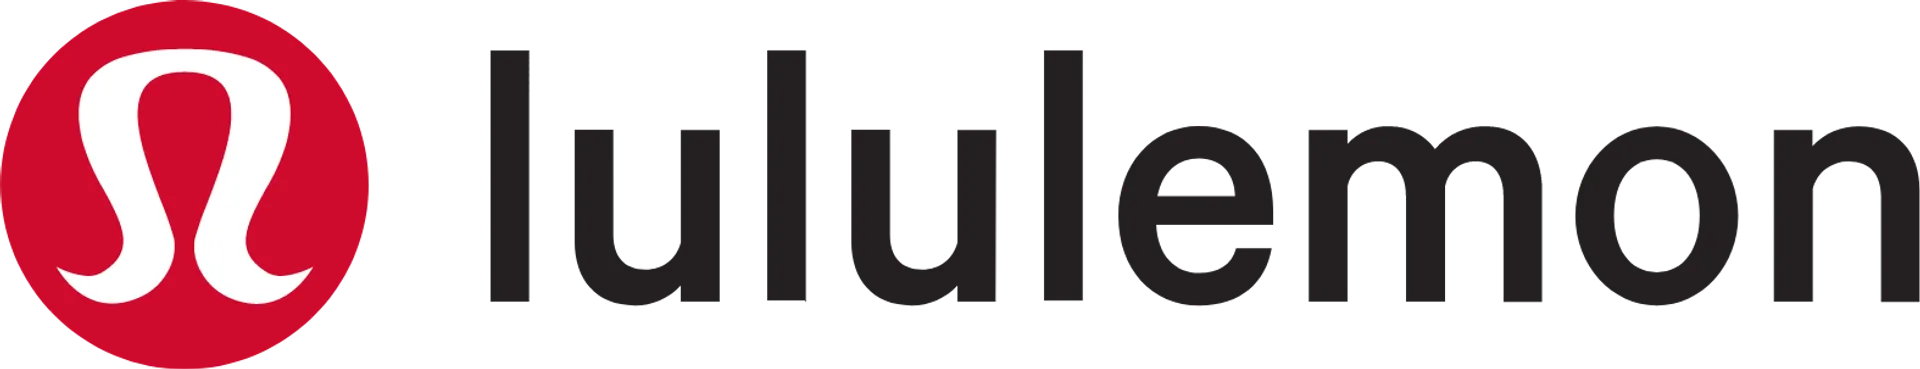 LULULEMON logo